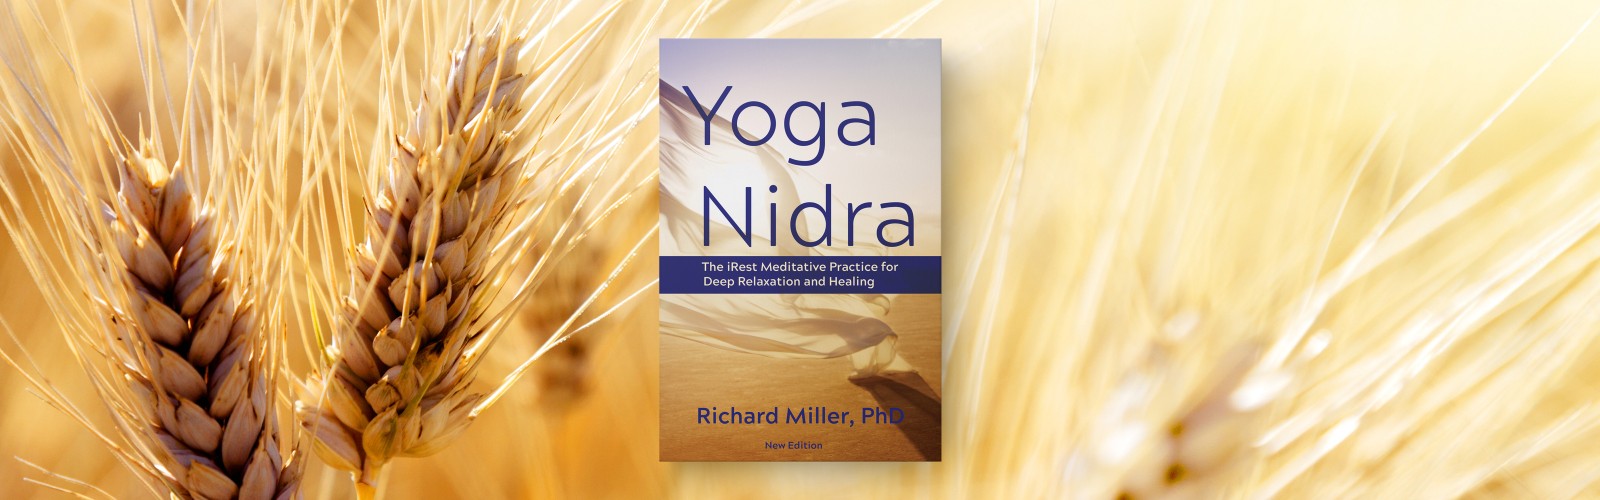 Yoga Nidra Book Resource Page Desktop Banner